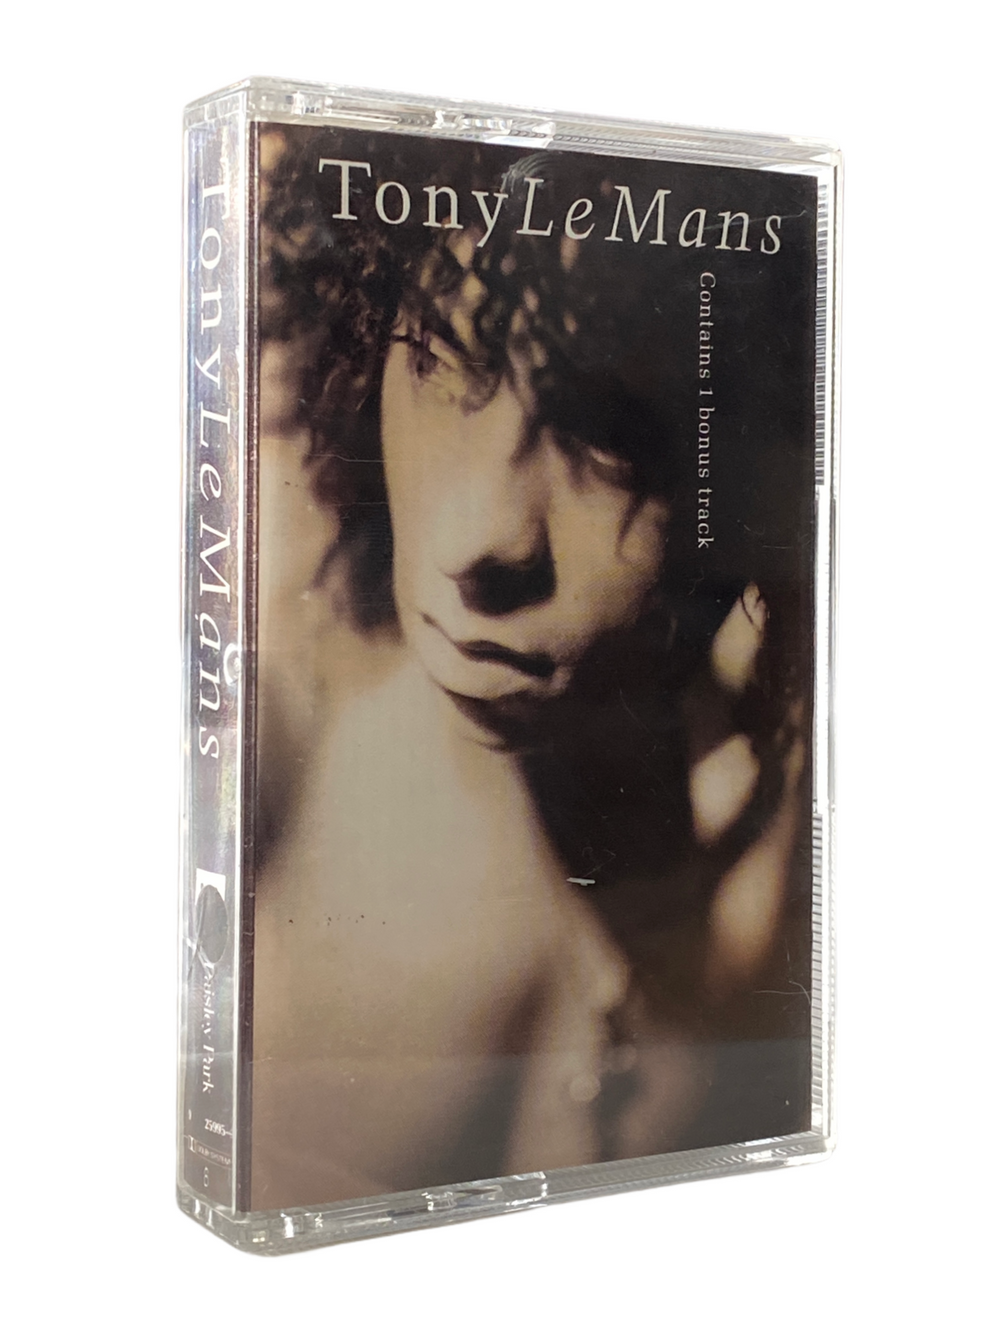 Prince – Tony Le Mans Self Titled Original Cassette Tape 1989 USA Release Prince Bonus Track